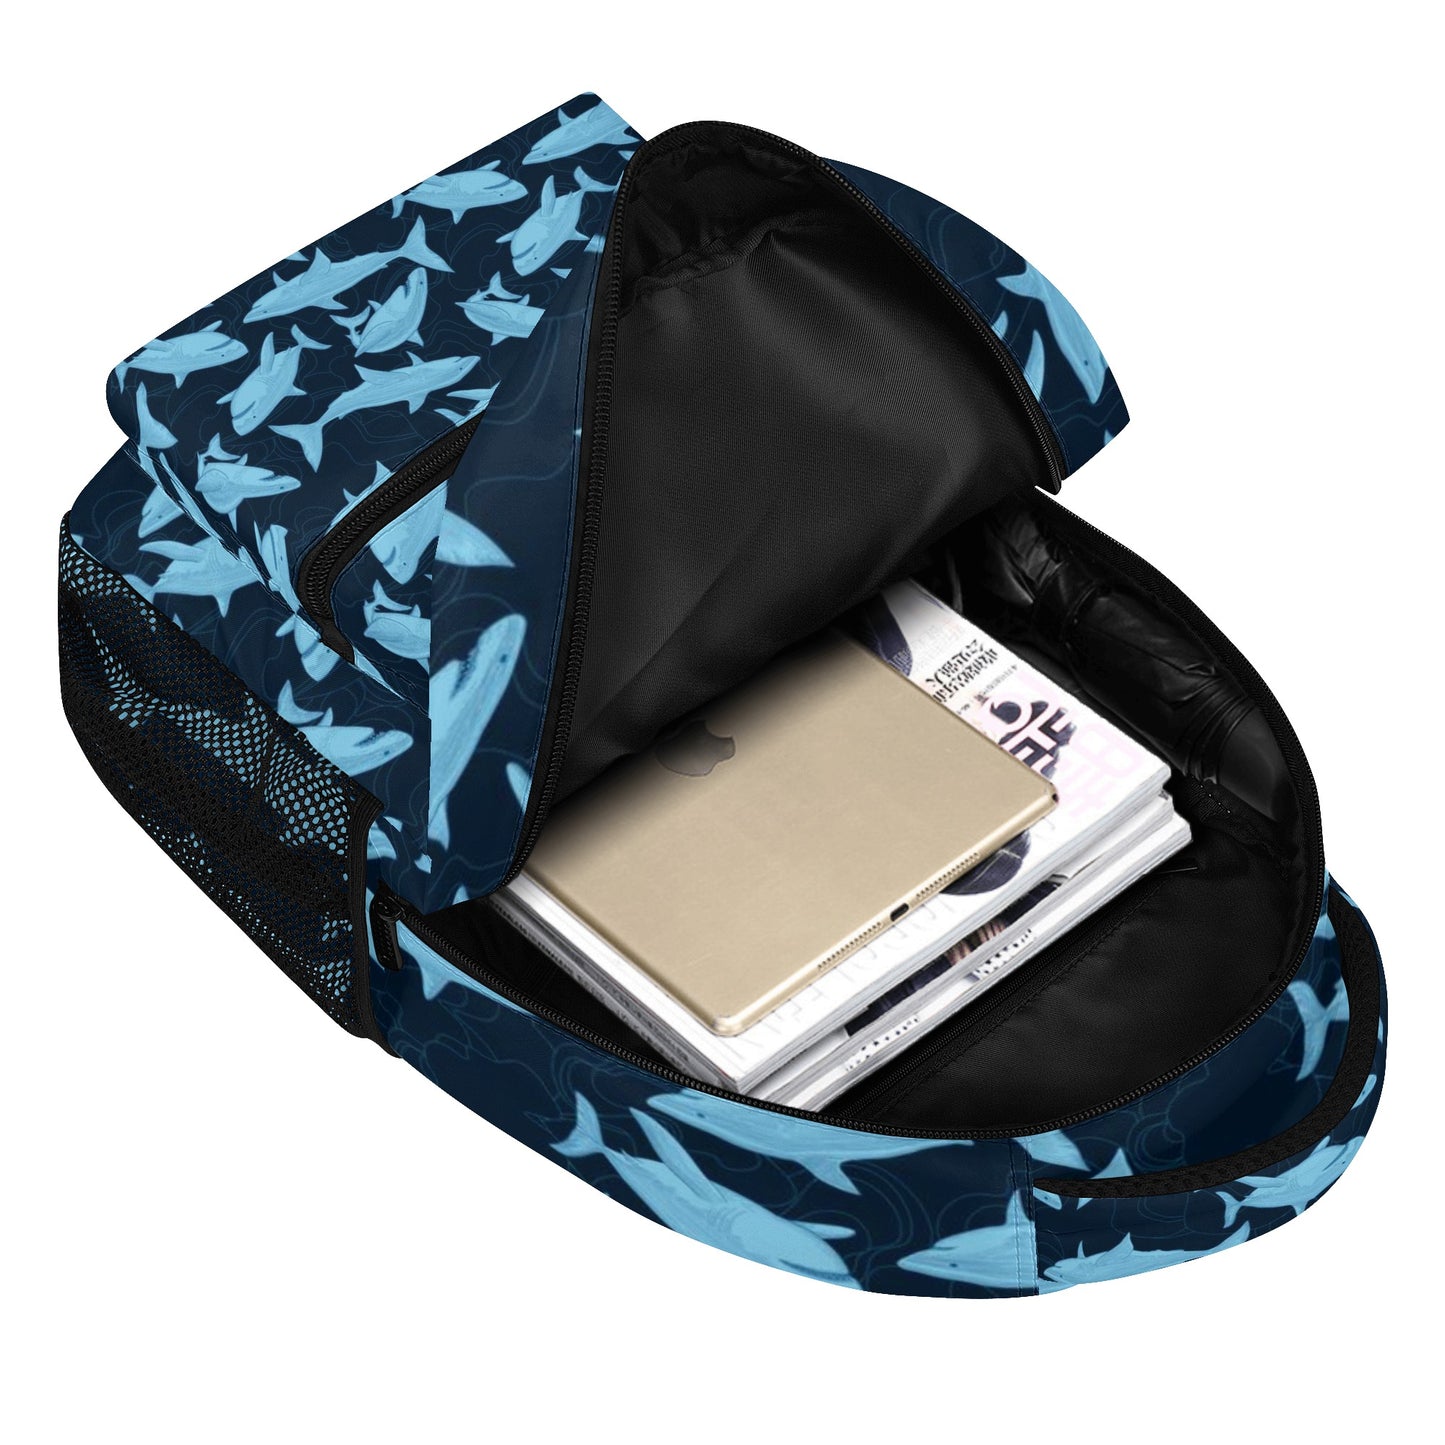 Shark Backpack, Blue Ocean Men Women Kids Gift Him Her School College Cool Waterproof Side Pockets Laptop Aesthetic Bag